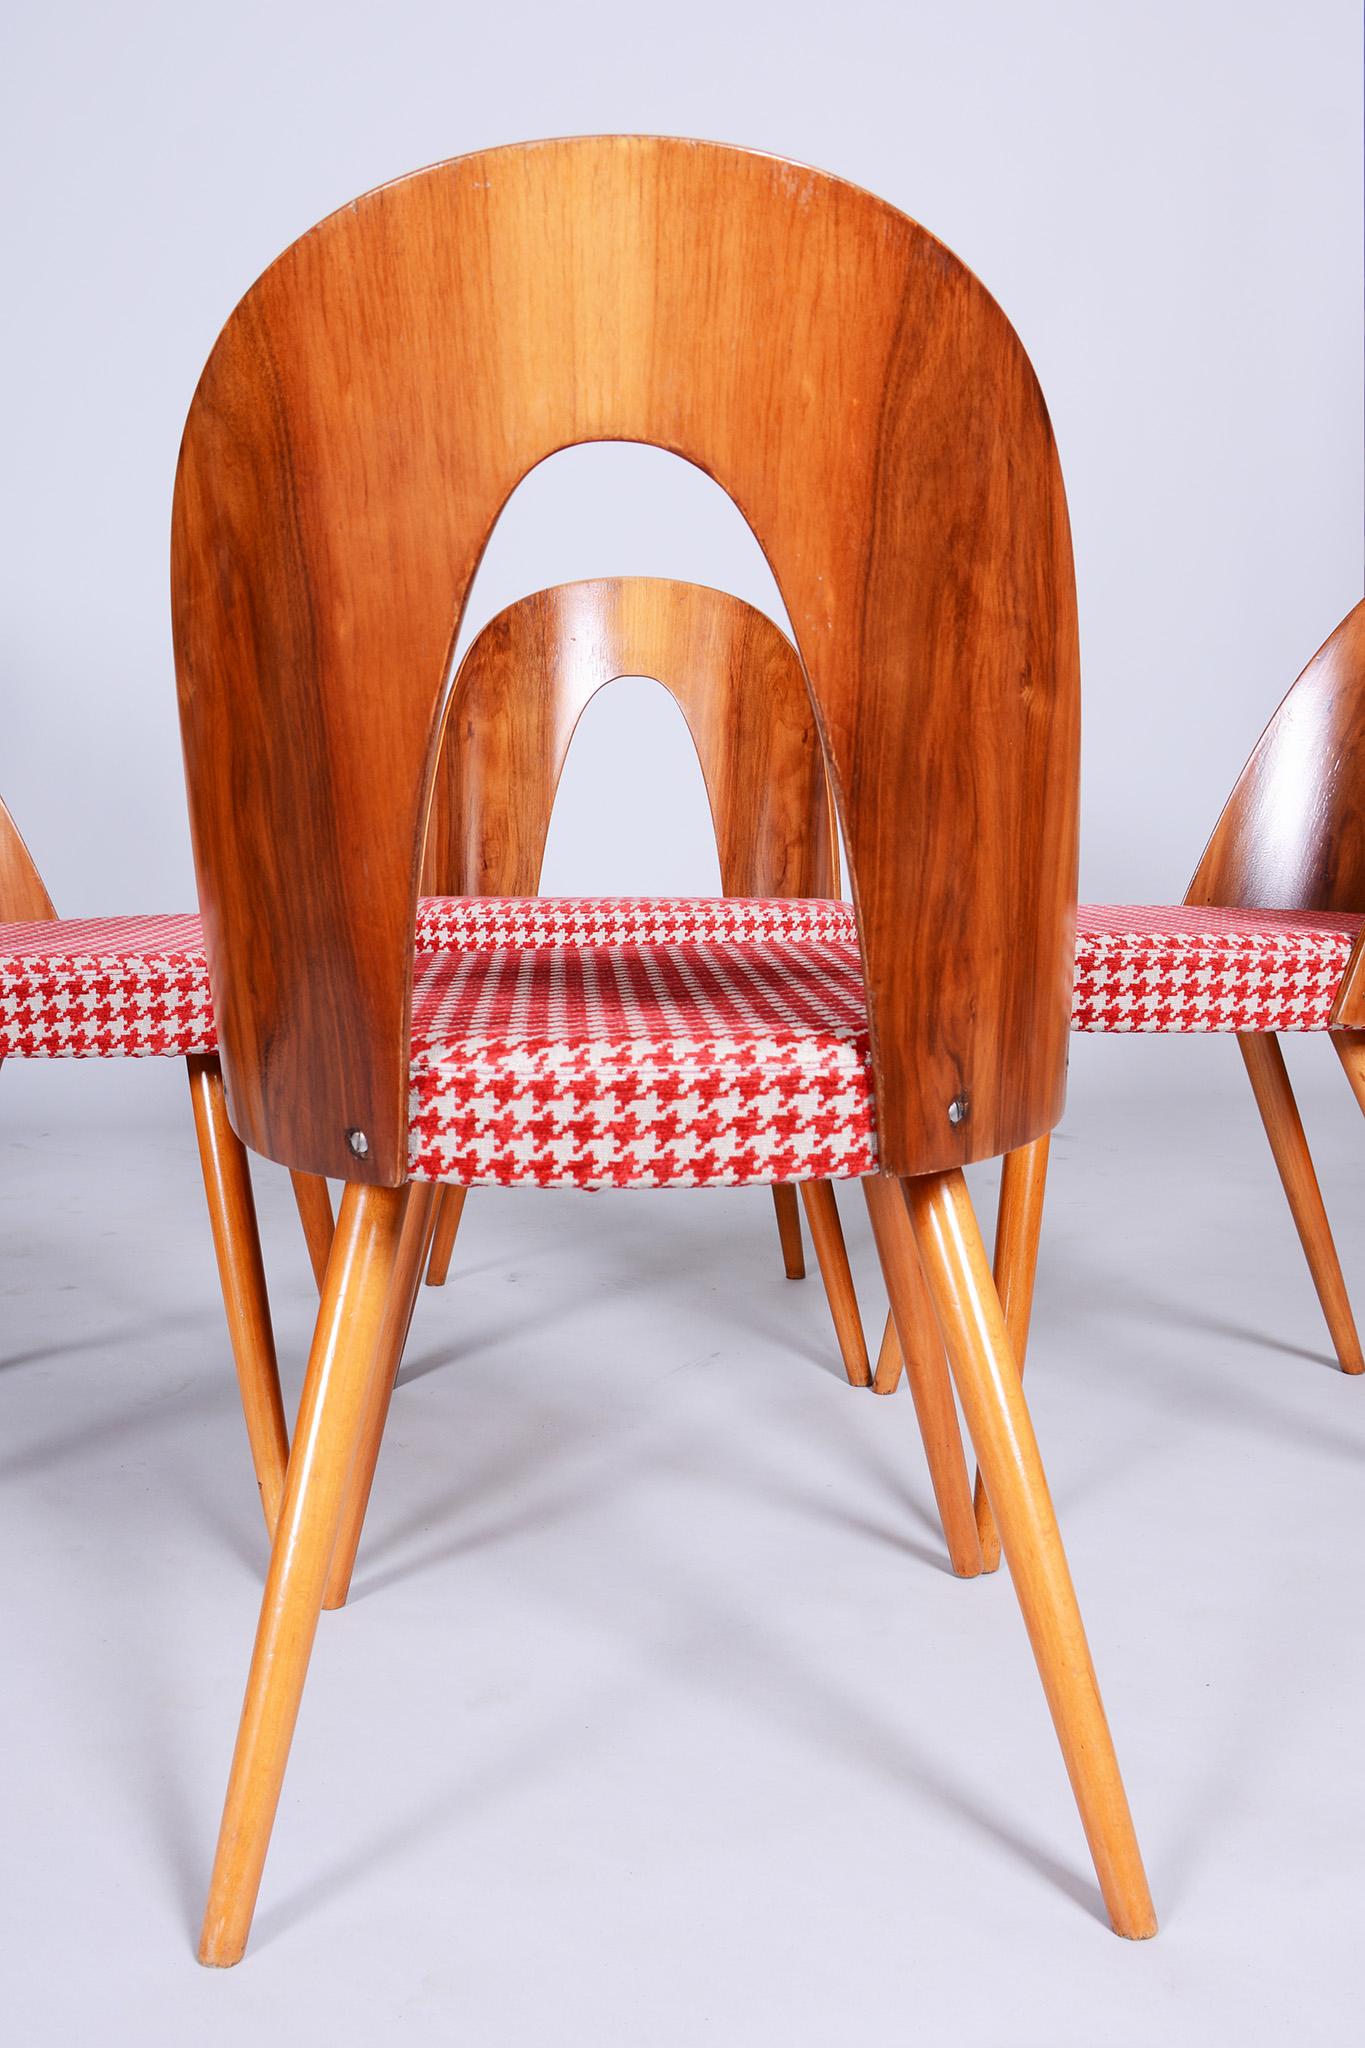 Four Restored Midcentury Chairs, Antonin Suman, Beech, Walnut, Czechia, 1950s In Good Condition For Sale In Horomerice, CZ